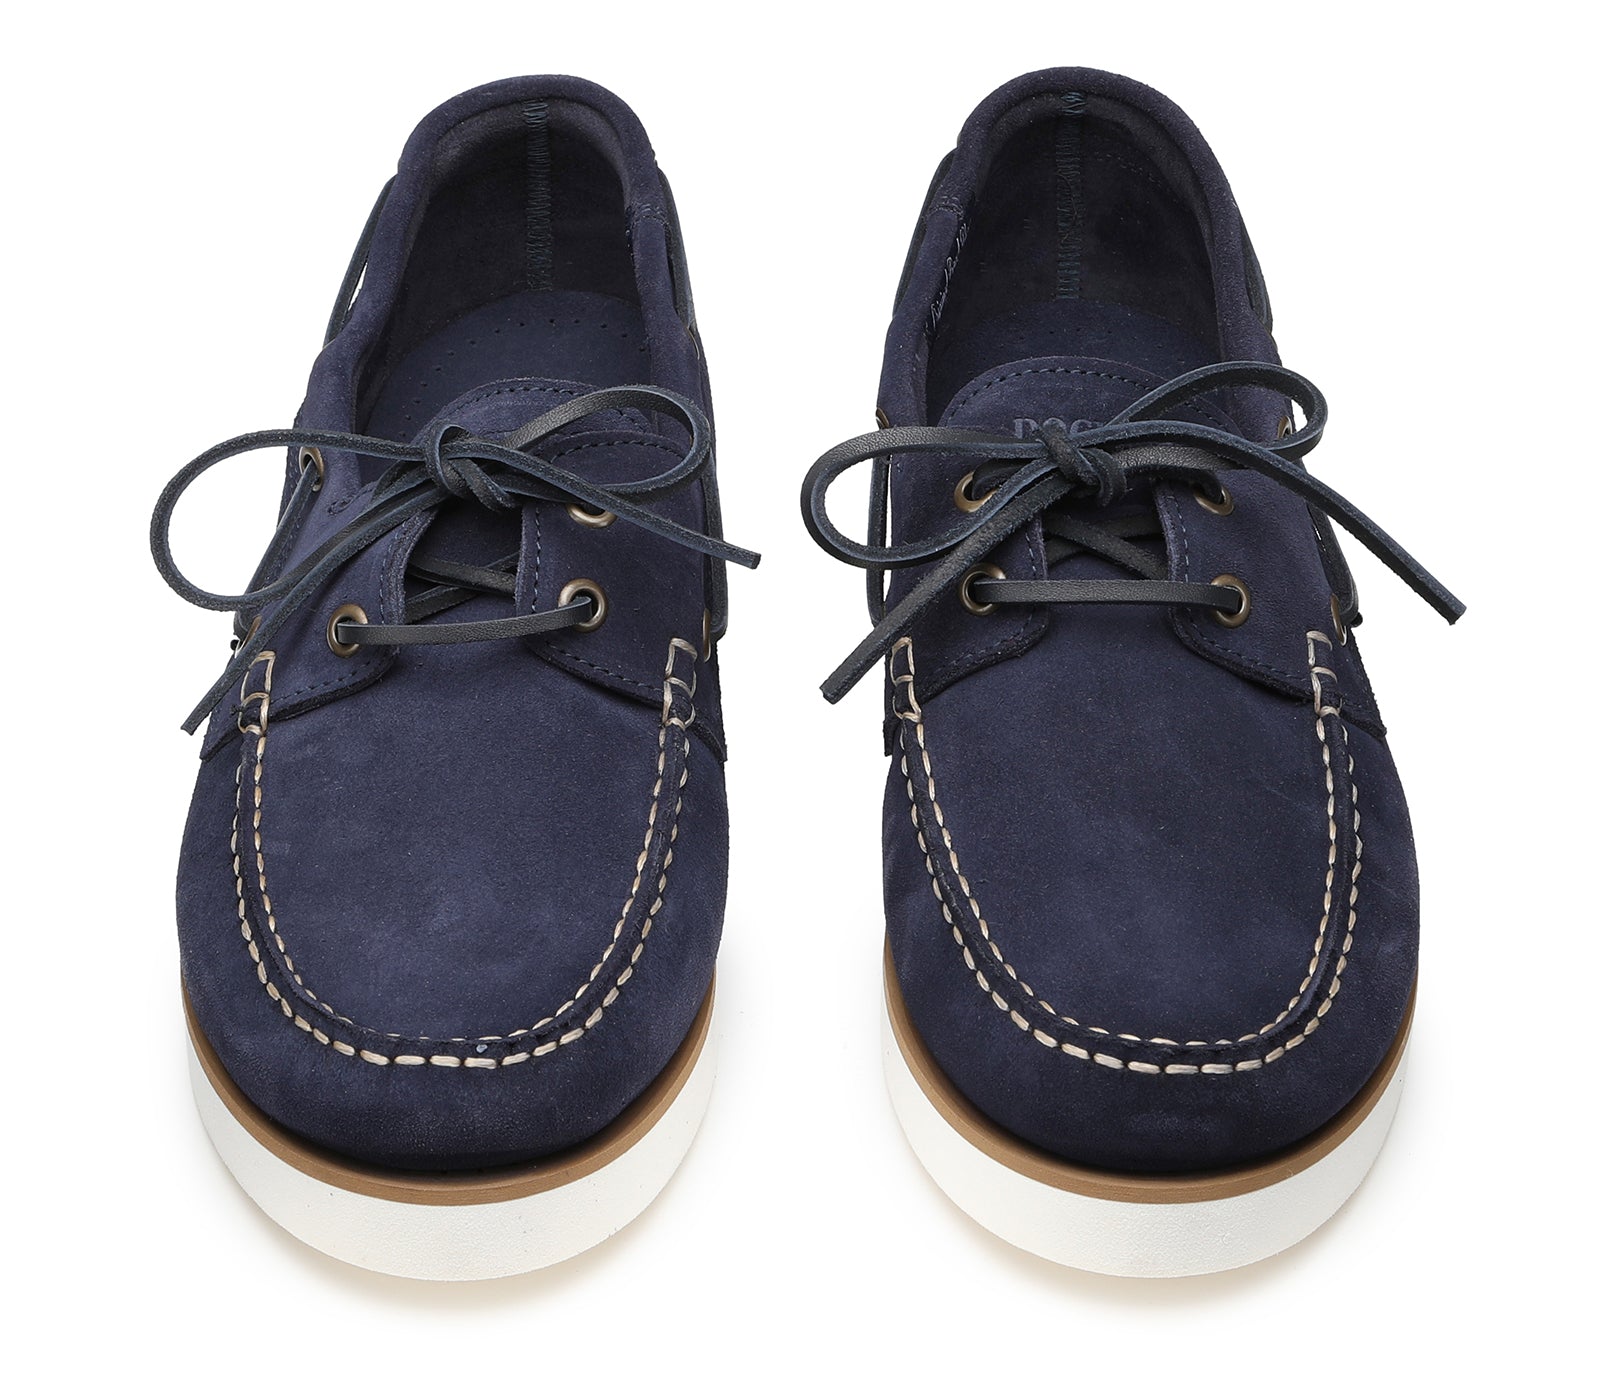 Blue Unlined Leather Men's Boat Shoes